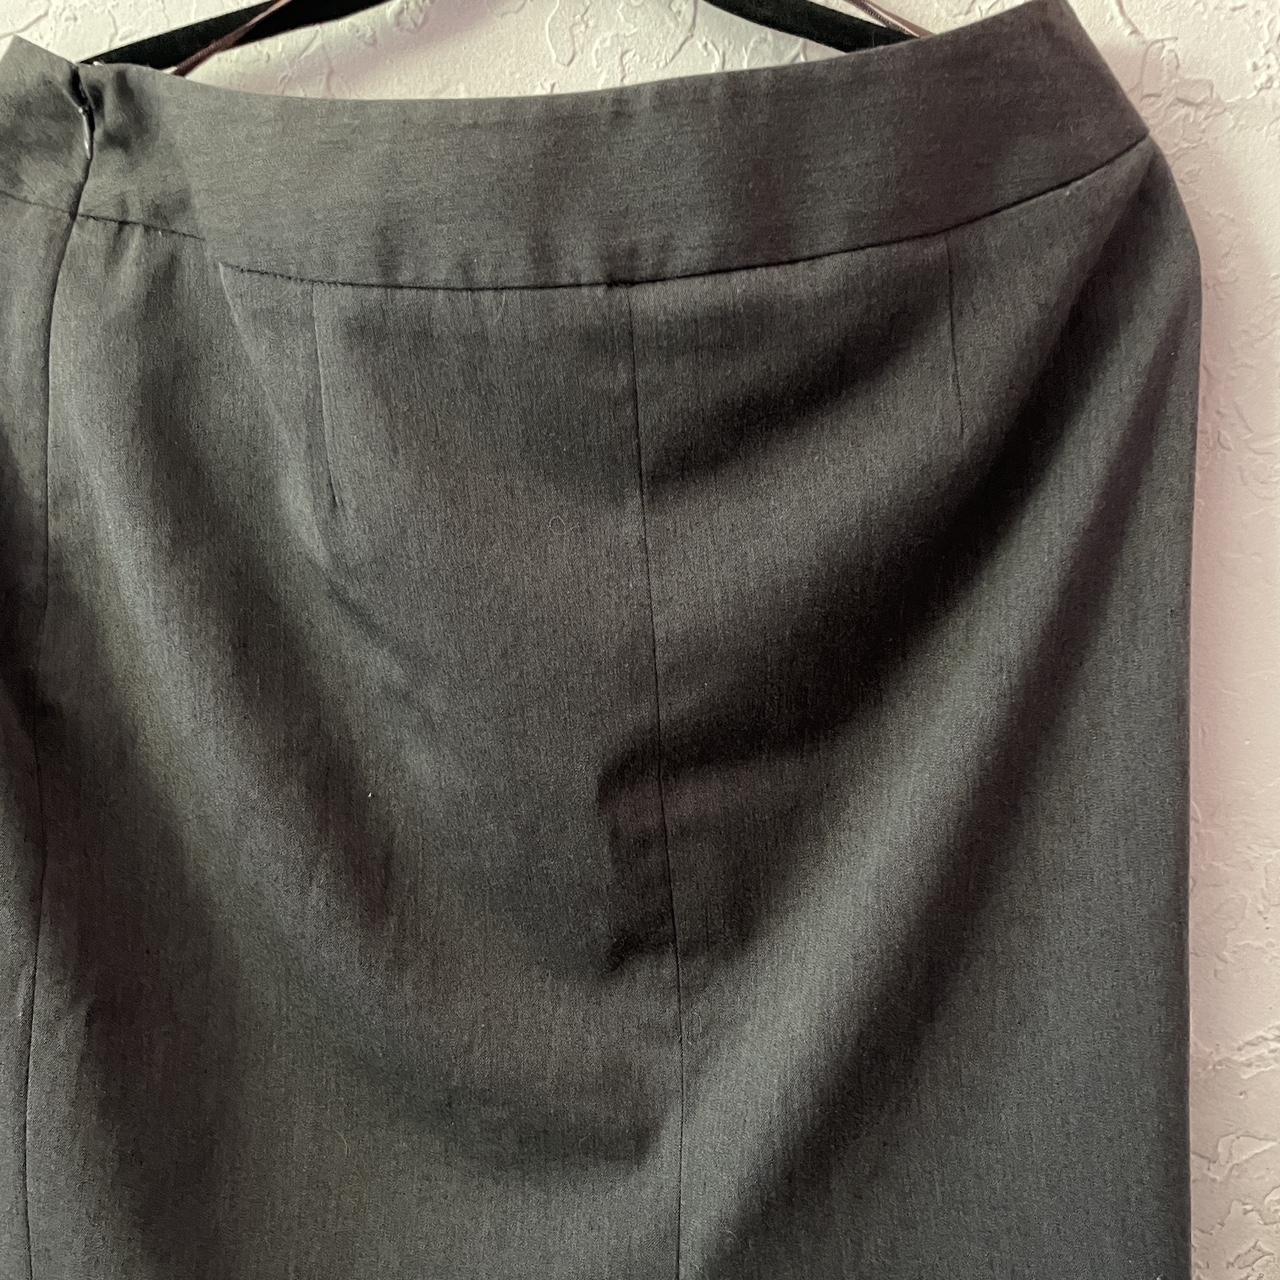 Grey Pencil skirt worn few times - Depop